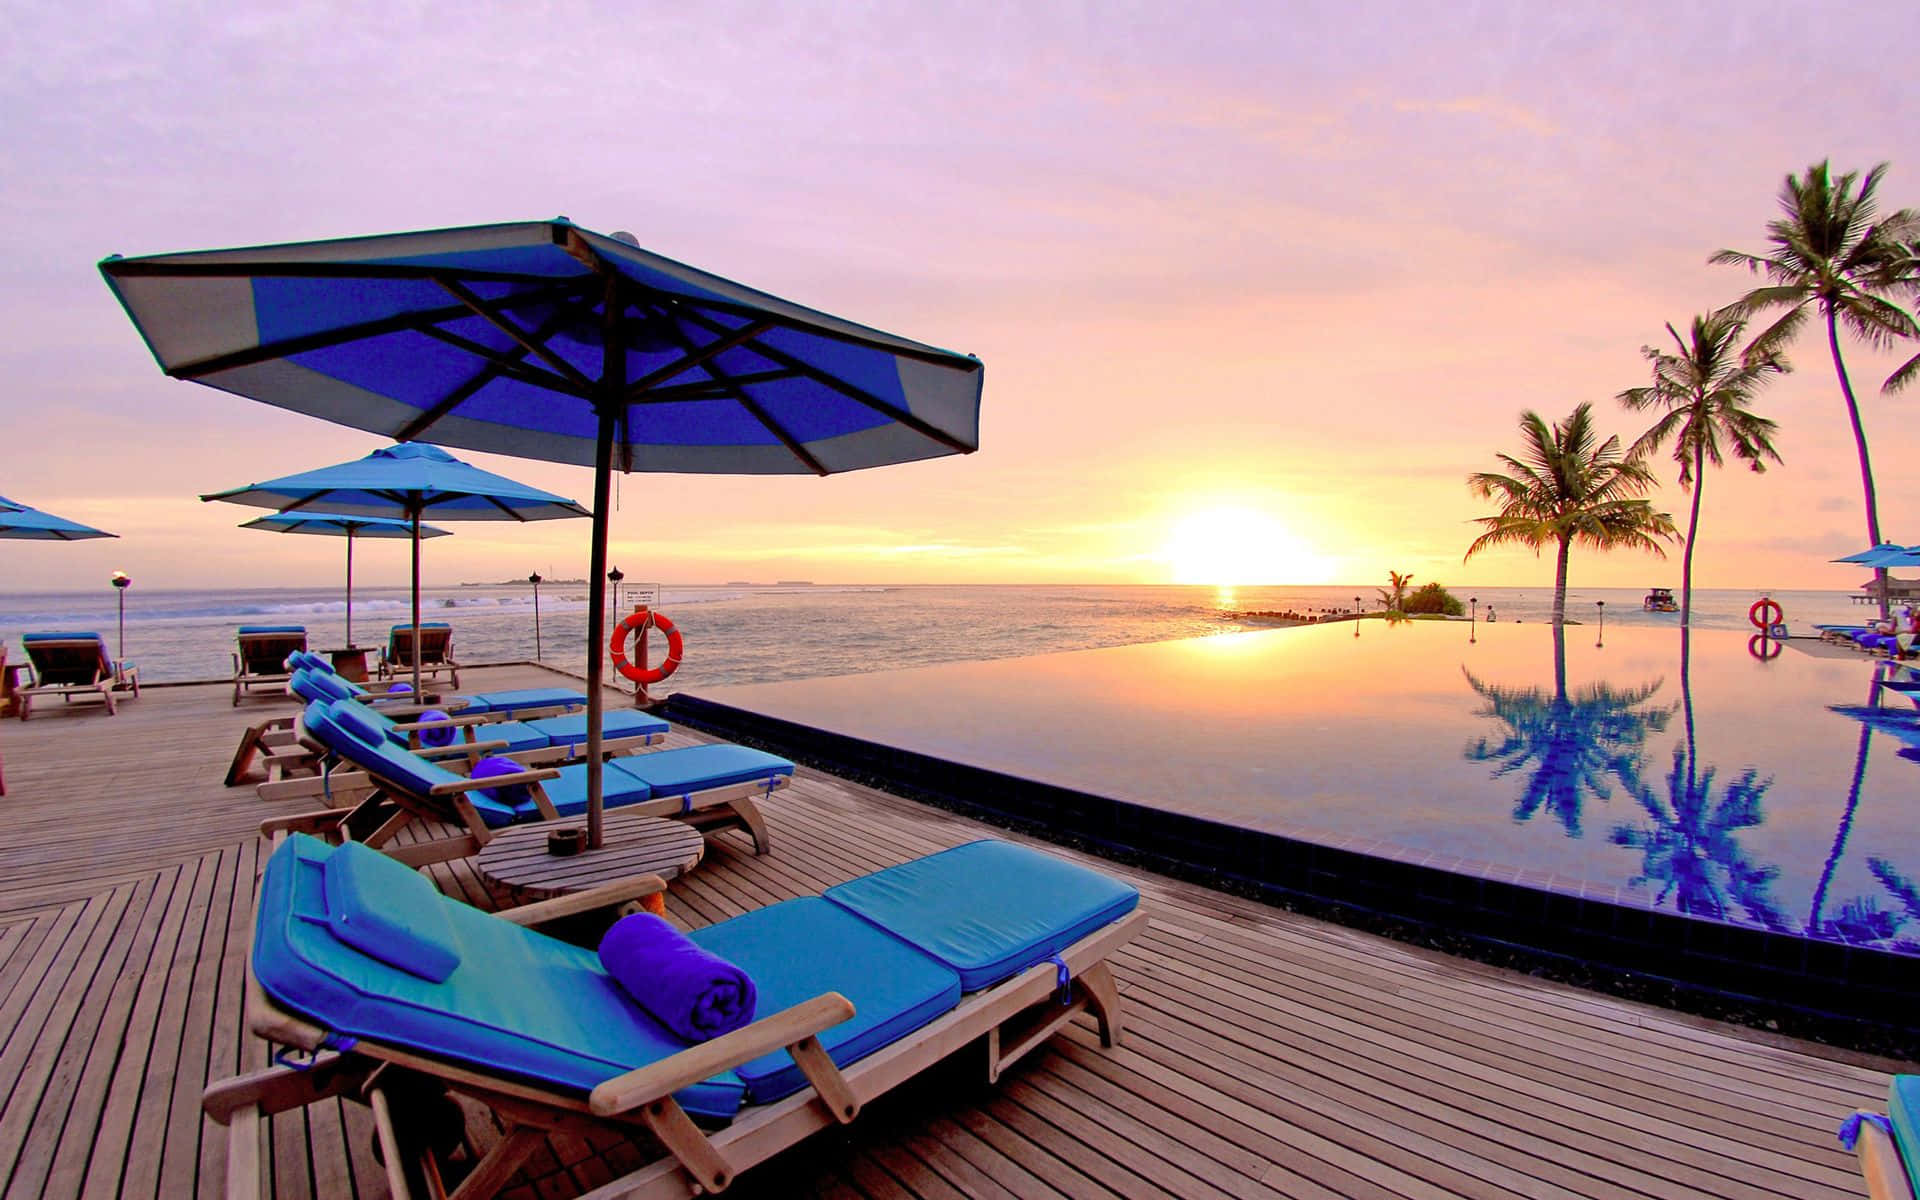 Tranquil Beach Resort at Sunset Wallpaper